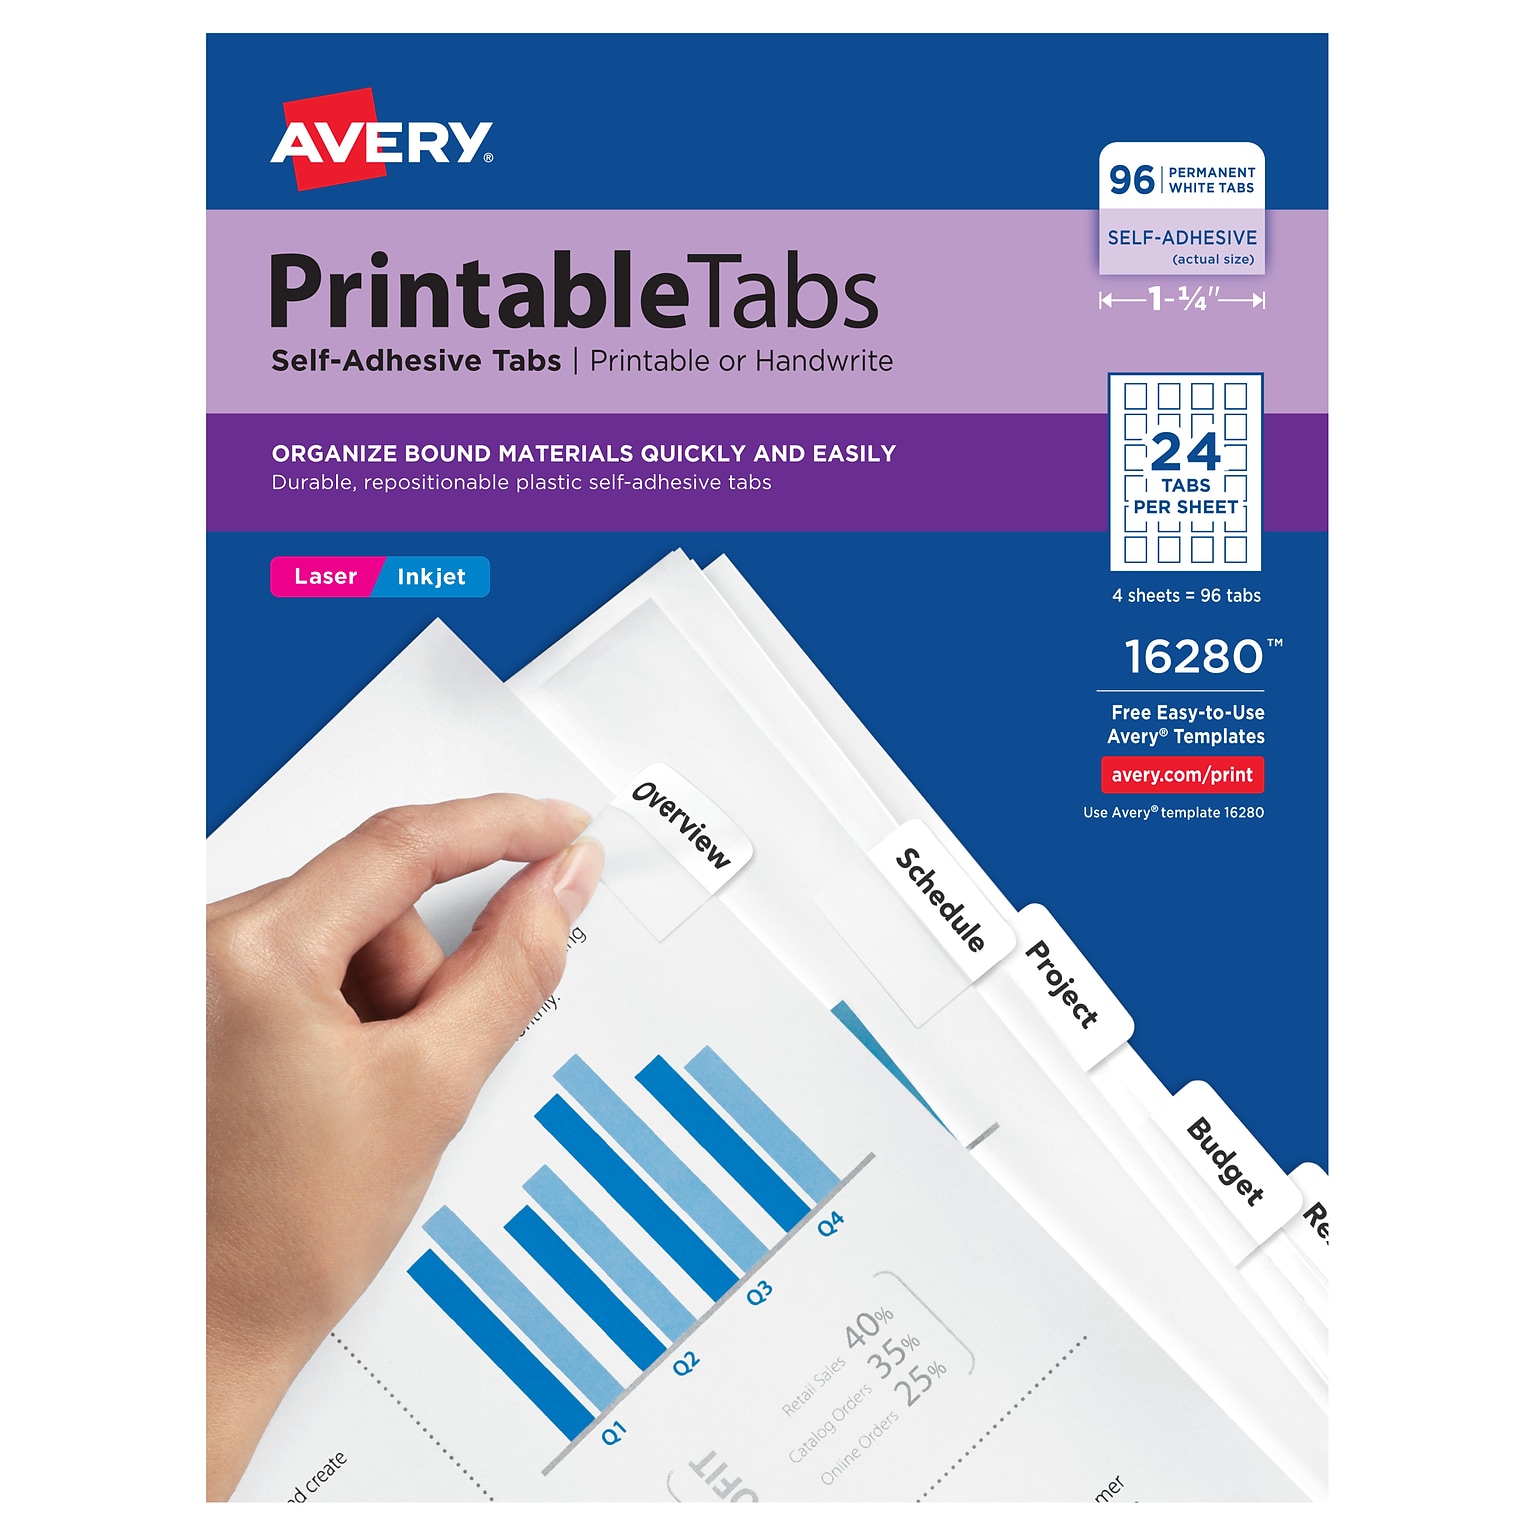 Avery Printable Self-Adhesive Plastic Tabs, 1-1/4, White, 96/Pack (16280)